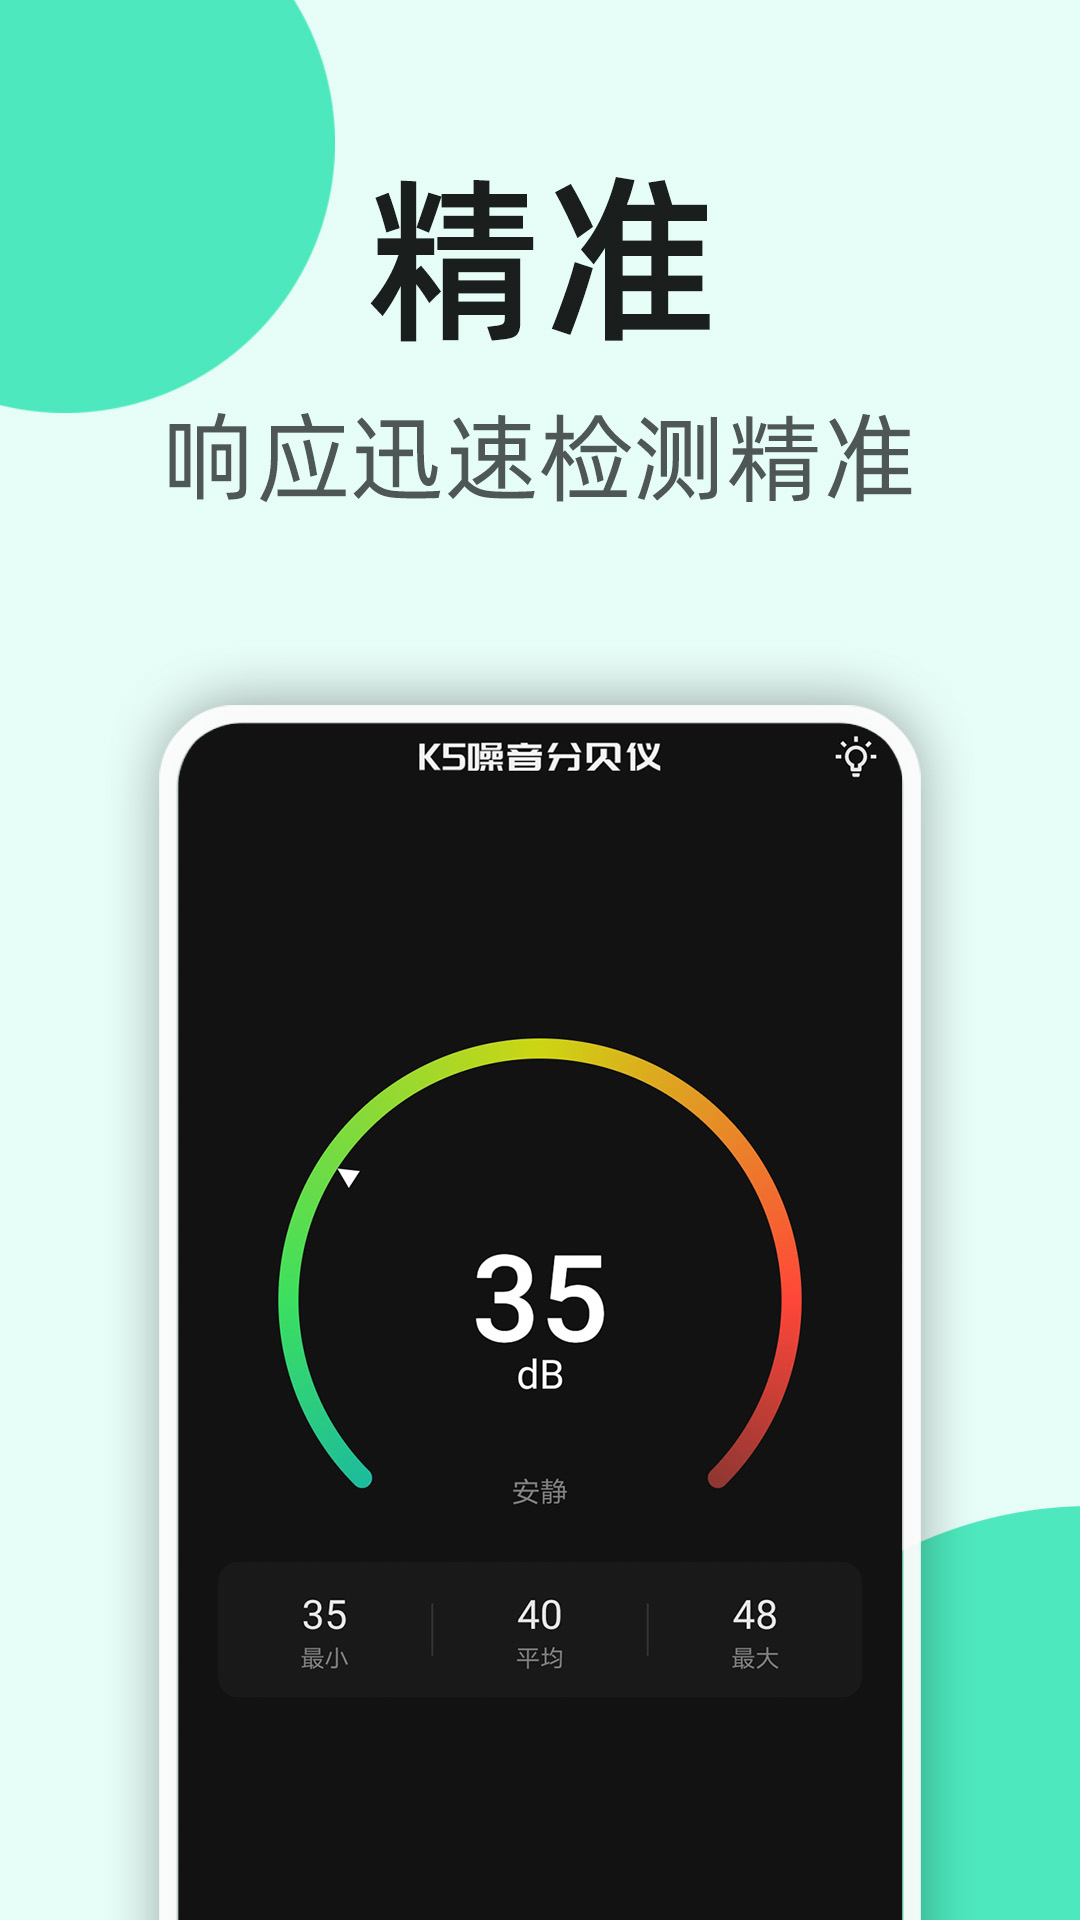 K5噪音分贝仪app1.2.1